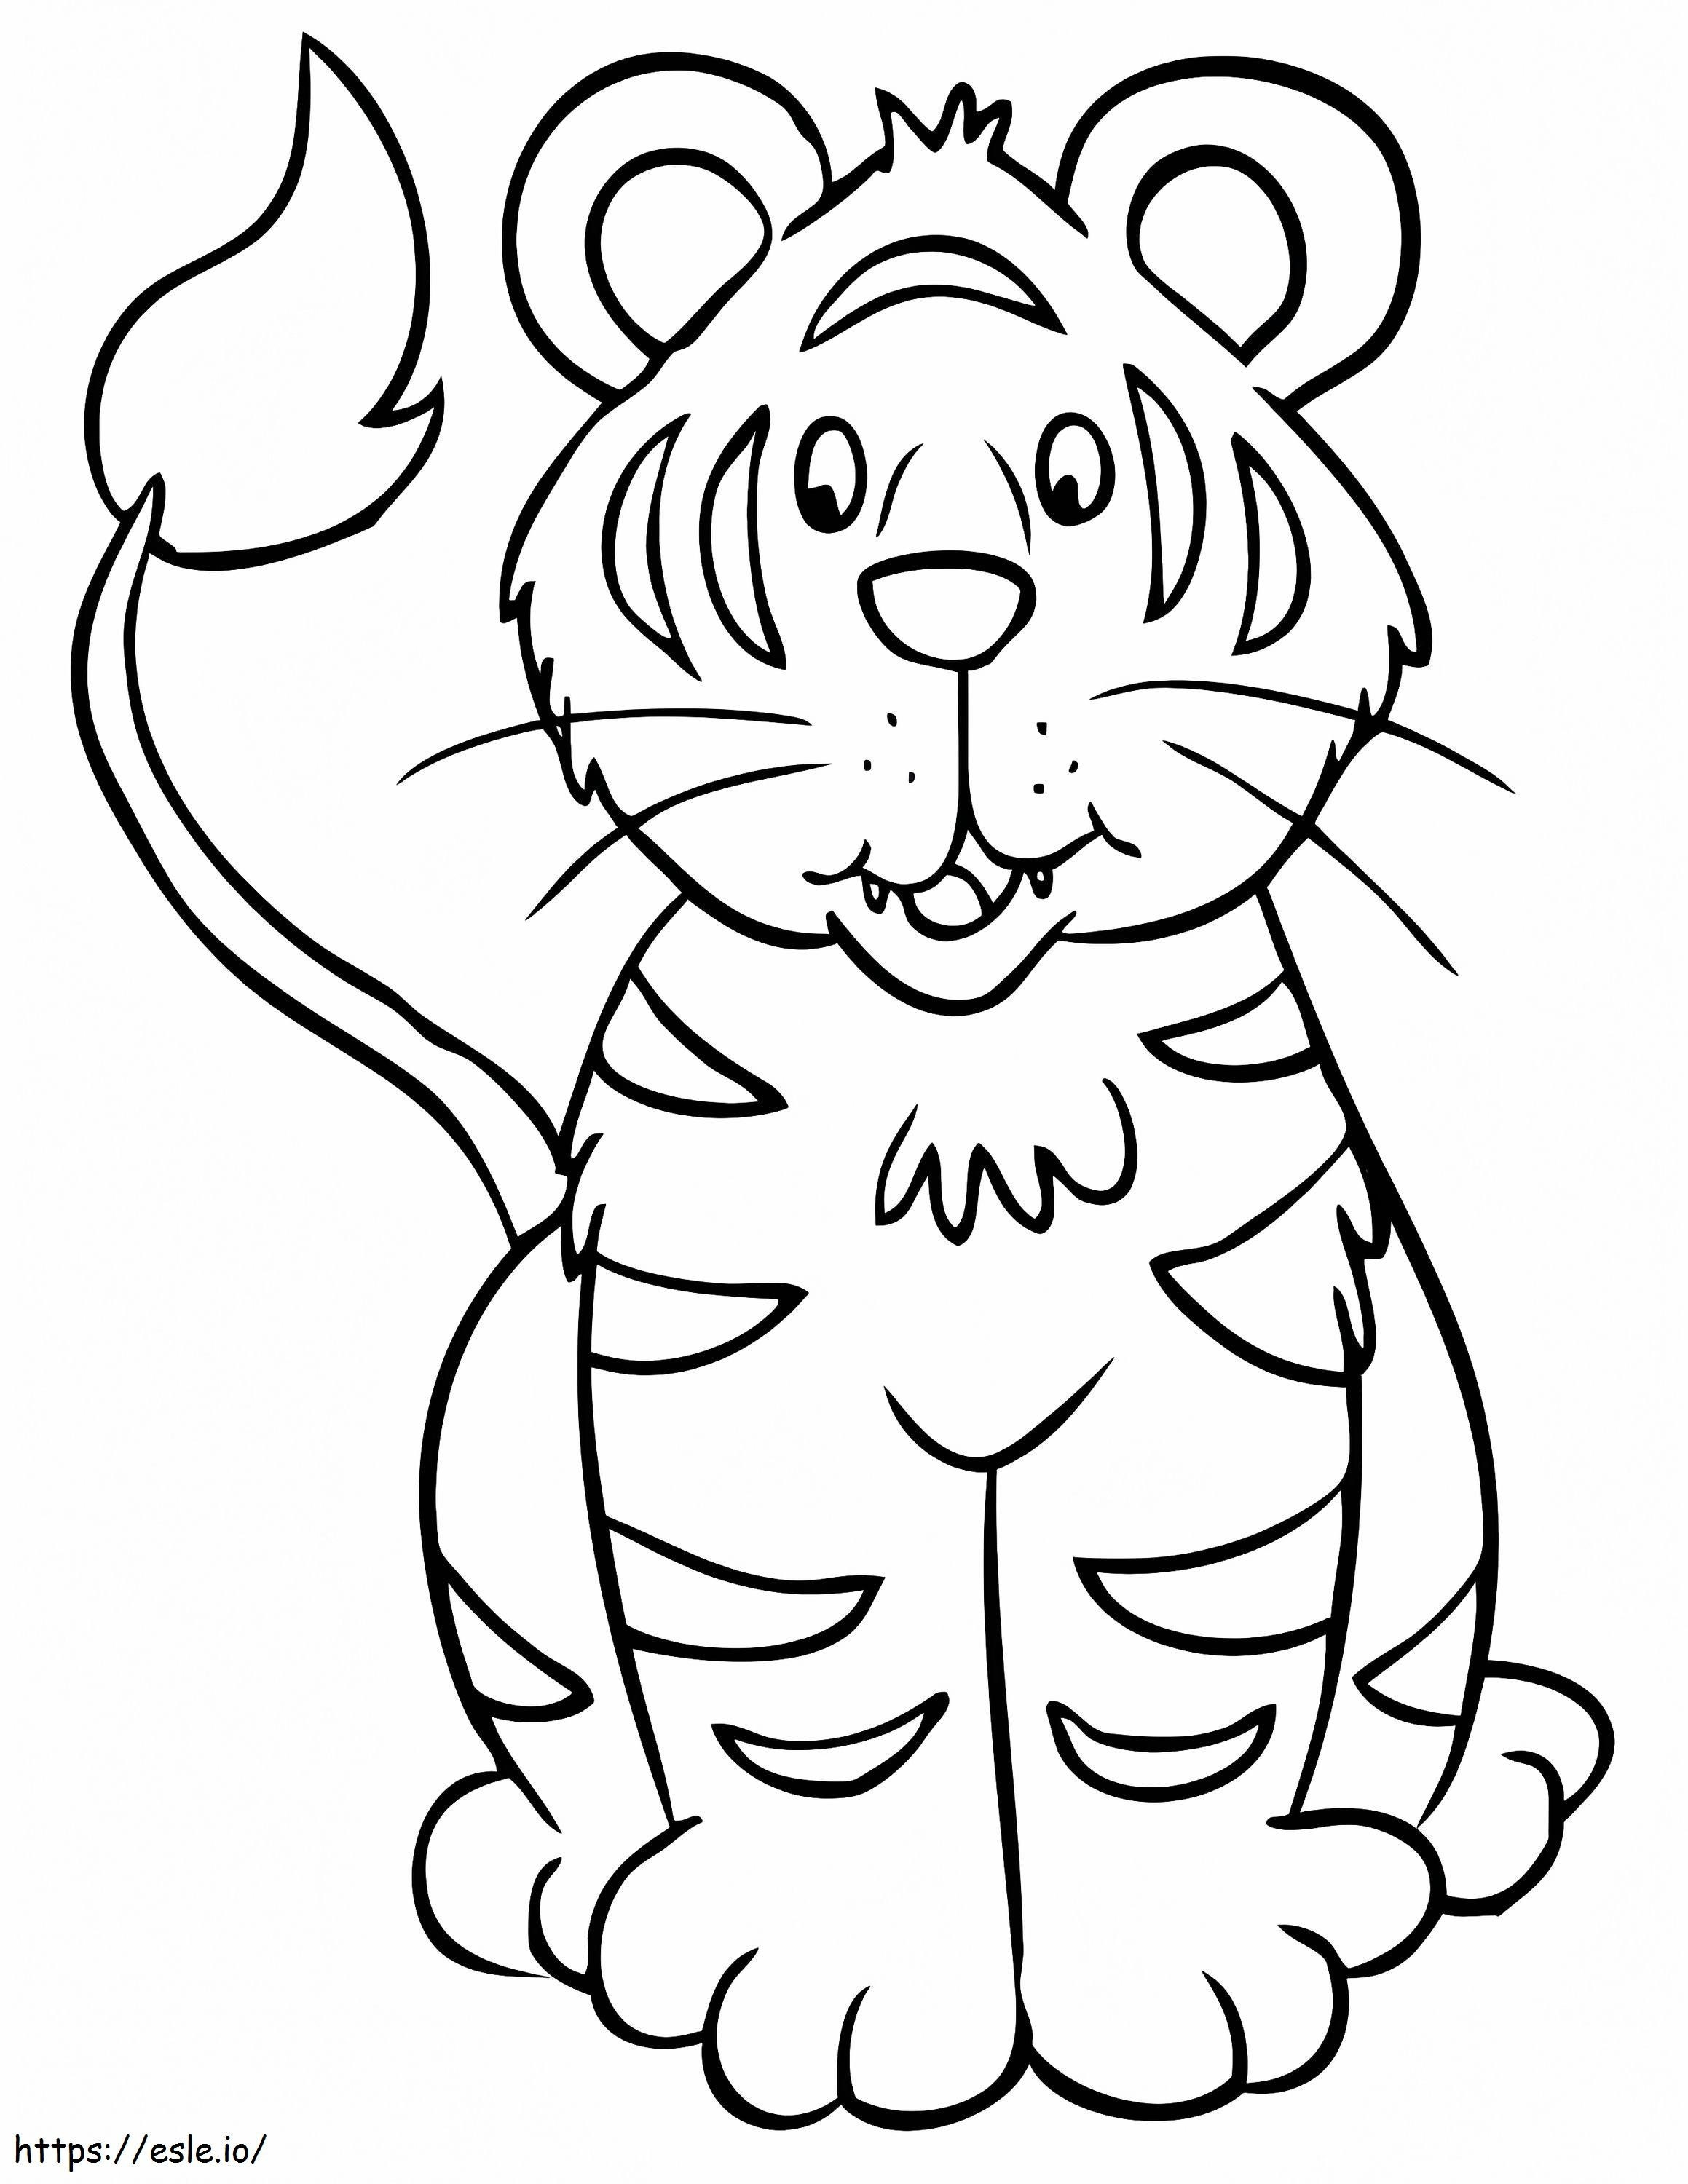 Fun Tiger coloring page